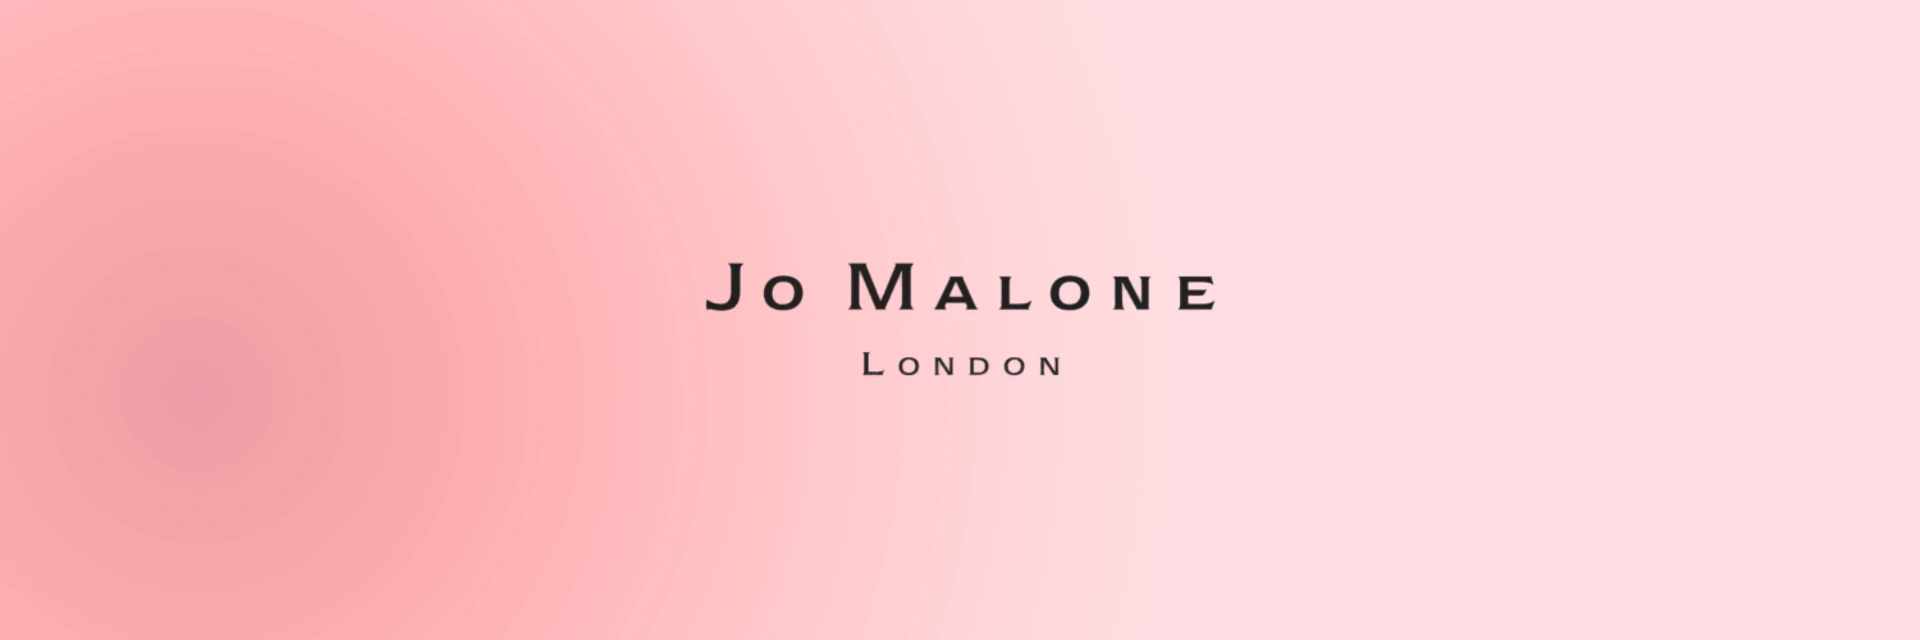 Image of Jo Malone perfume bottles on a white background